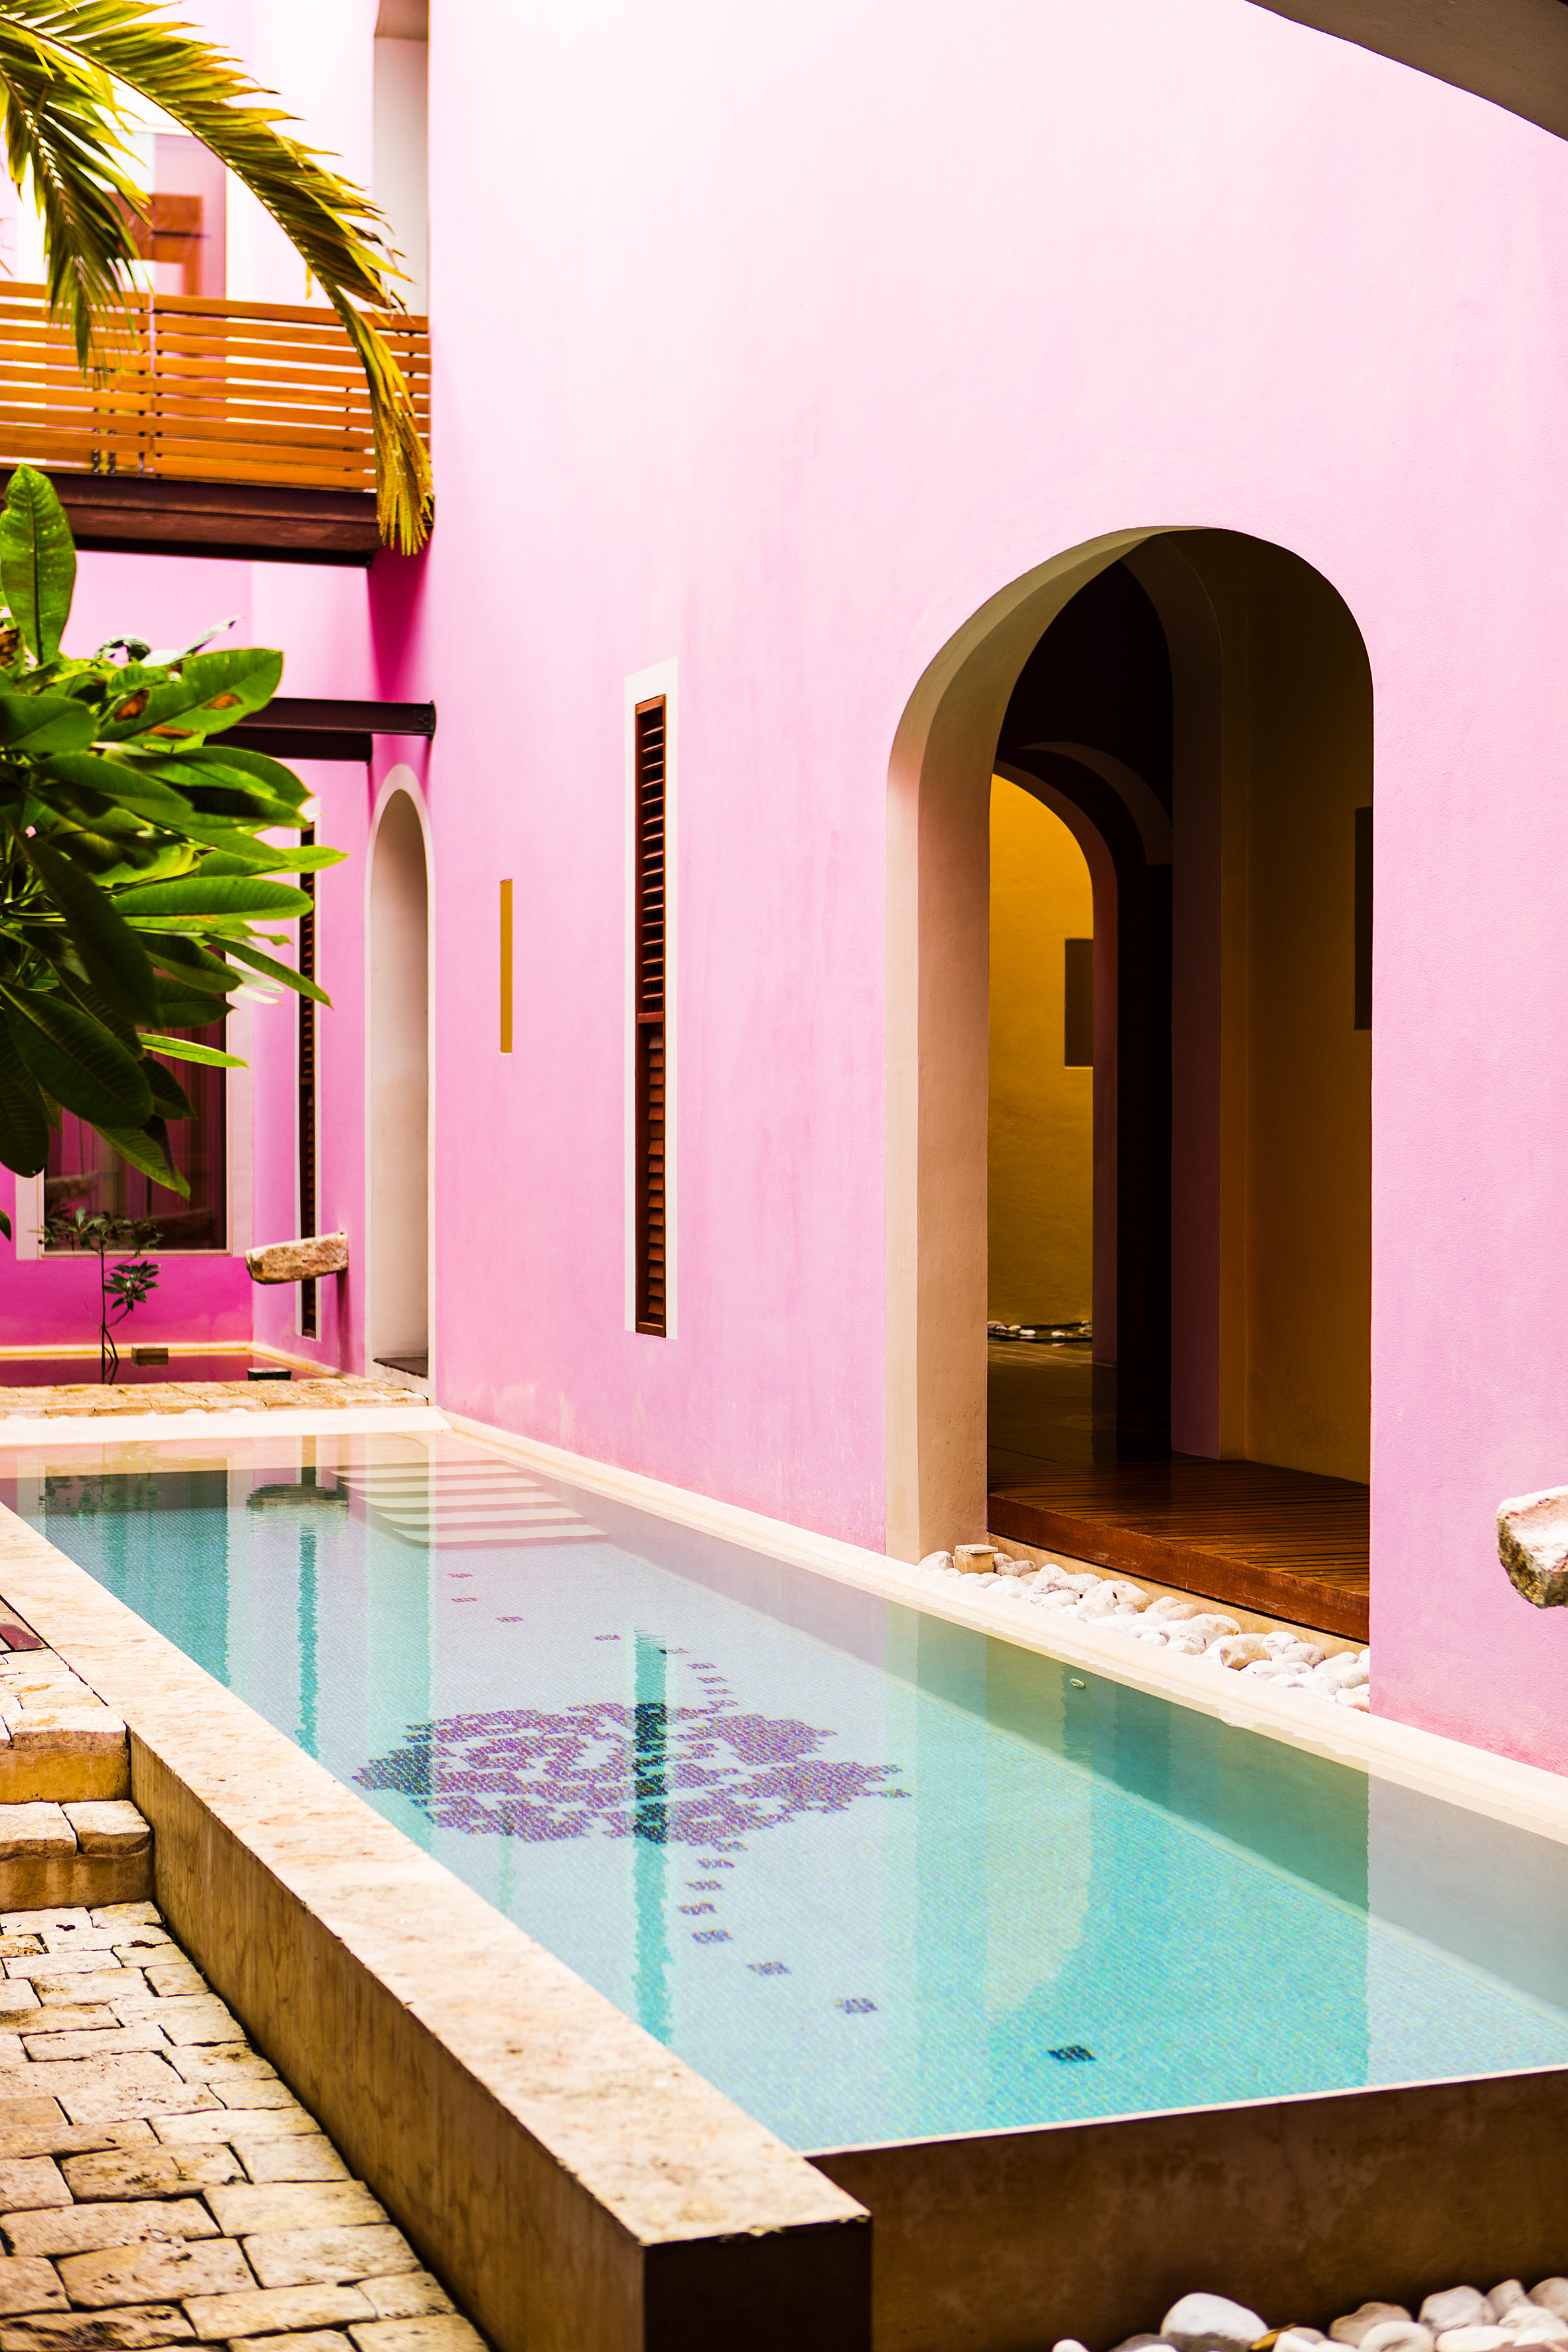 The pool at the Rosas & Xocolate Boutique Hotel & Spa, Merida, Mexico (Rosas & Xocolate/PA)